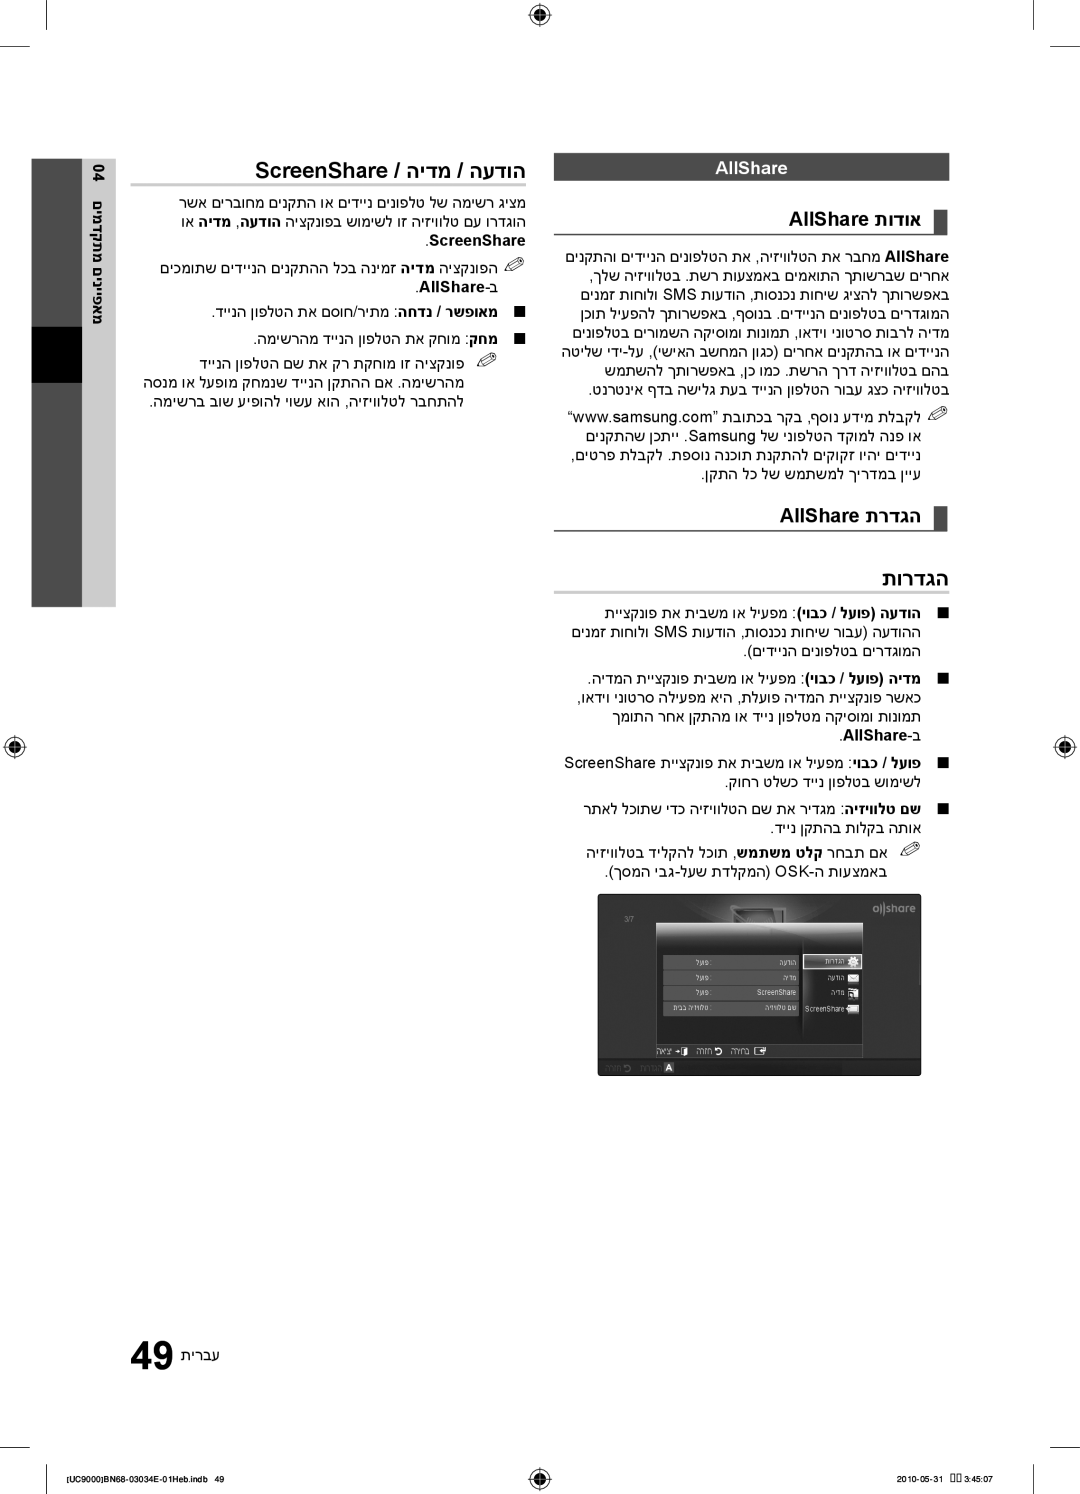 Samsung UA55C9000SRXSQ manual ScreenShare / הידמ / העדוה, AllShare תודוא, AllShare תרדגה 